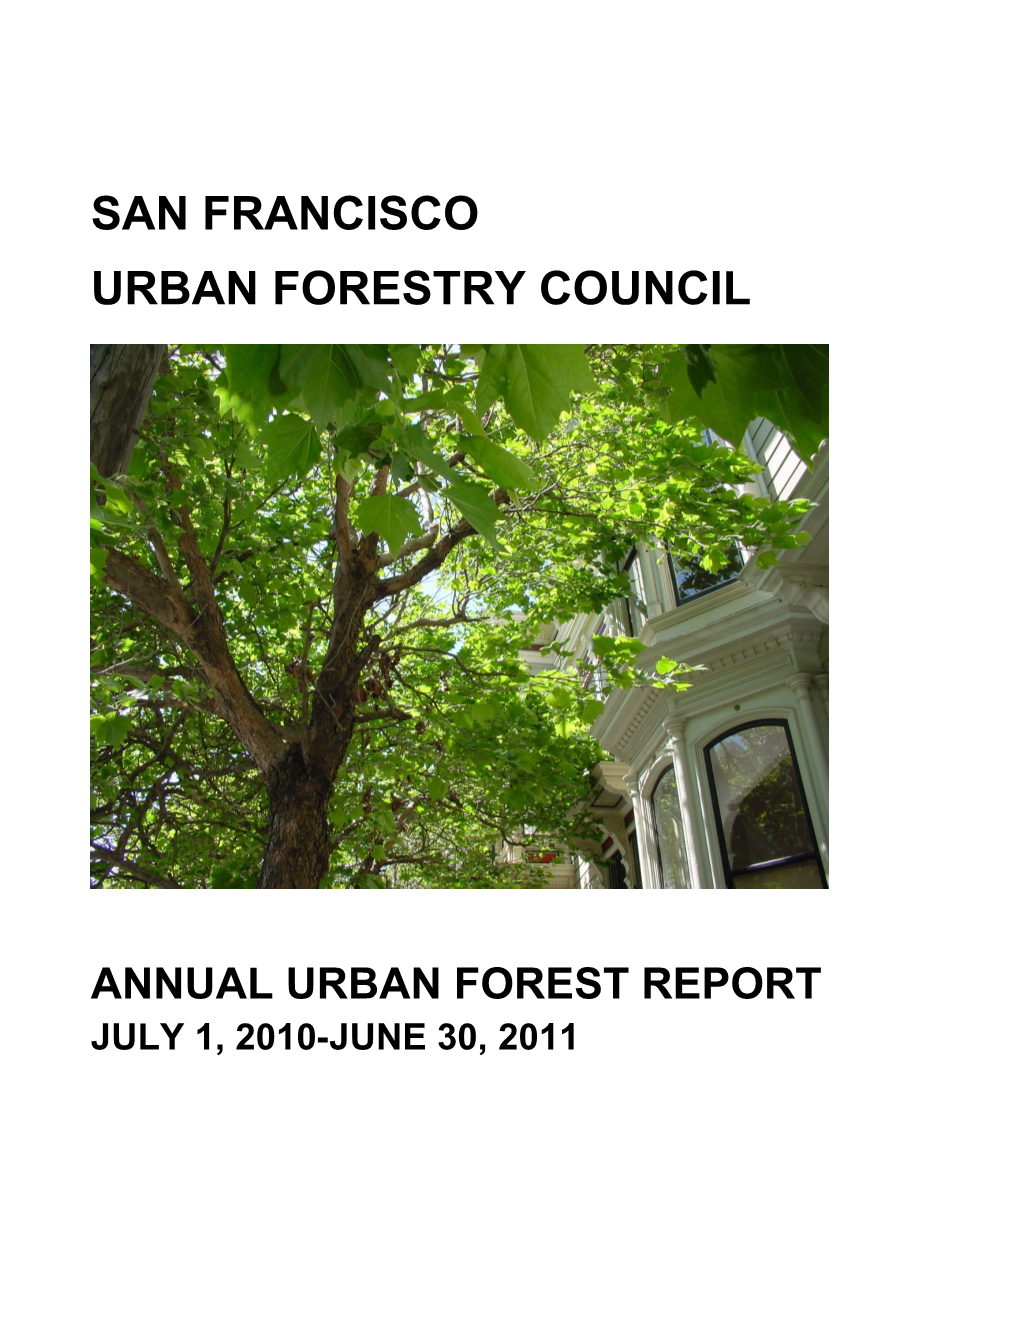 San Francisco Urban Forestry Council